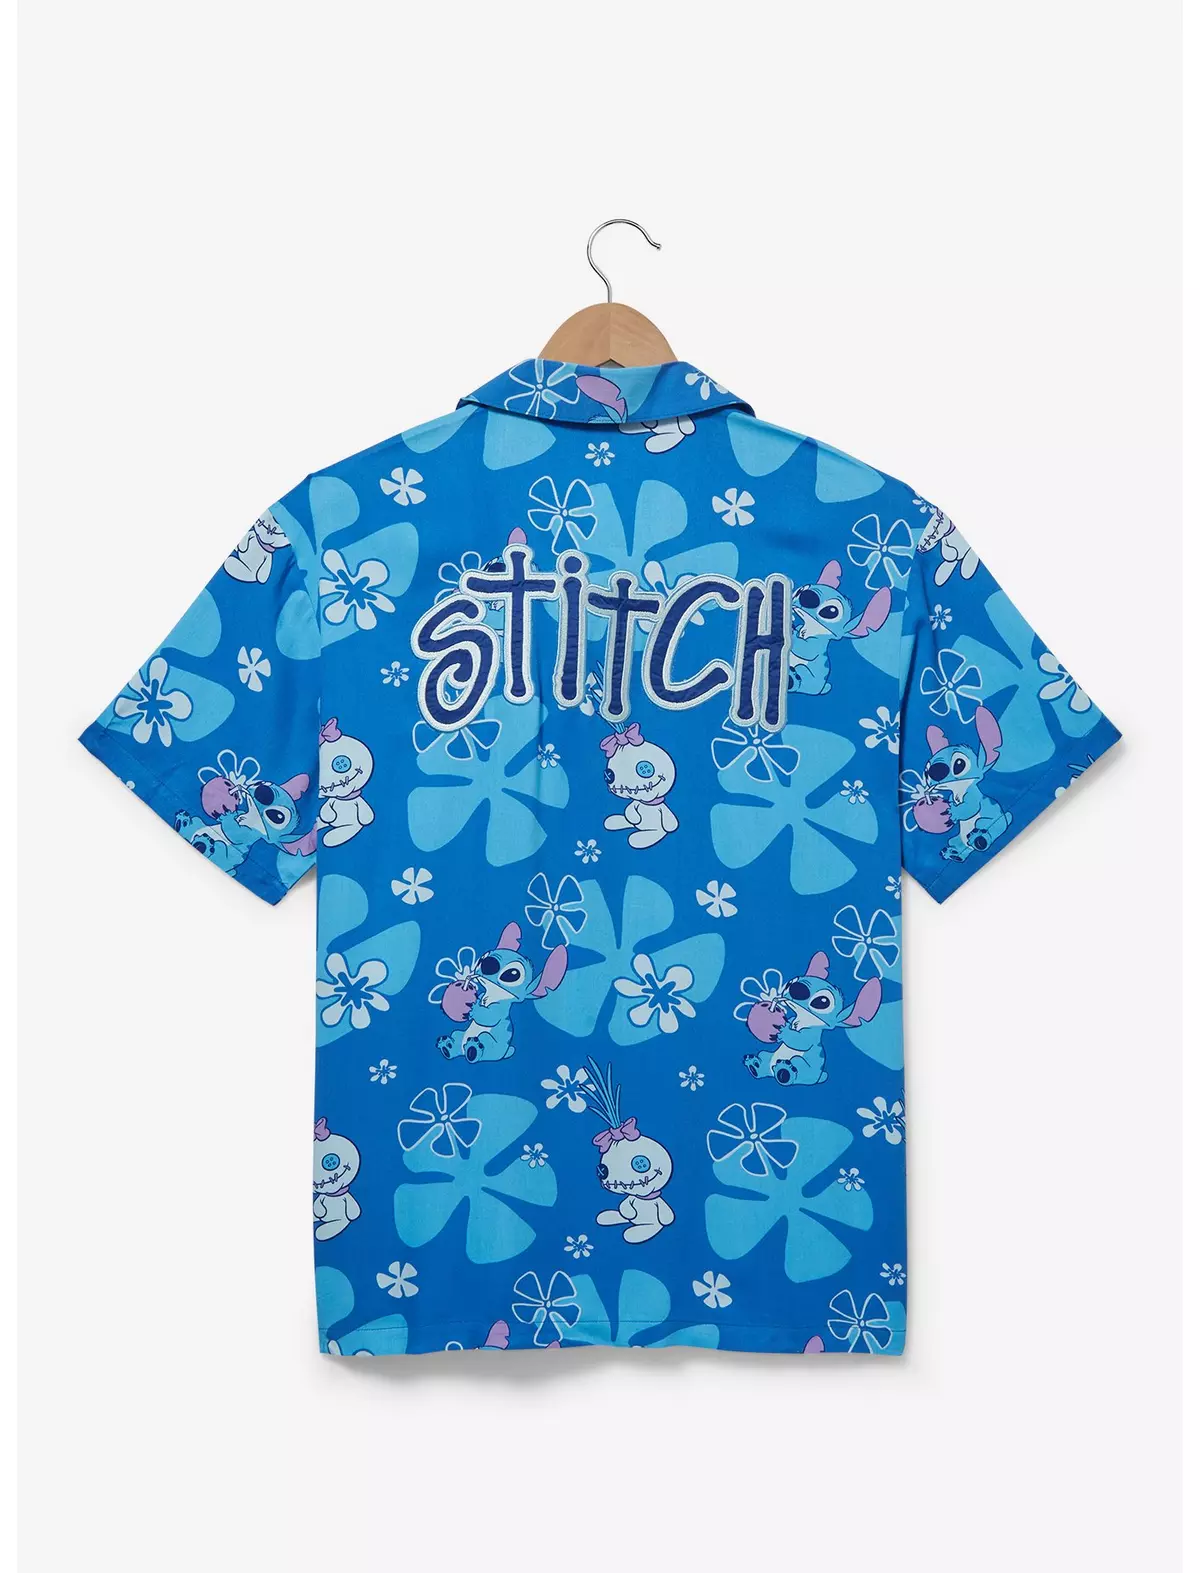 Stitch Merchandise from BoxLunch